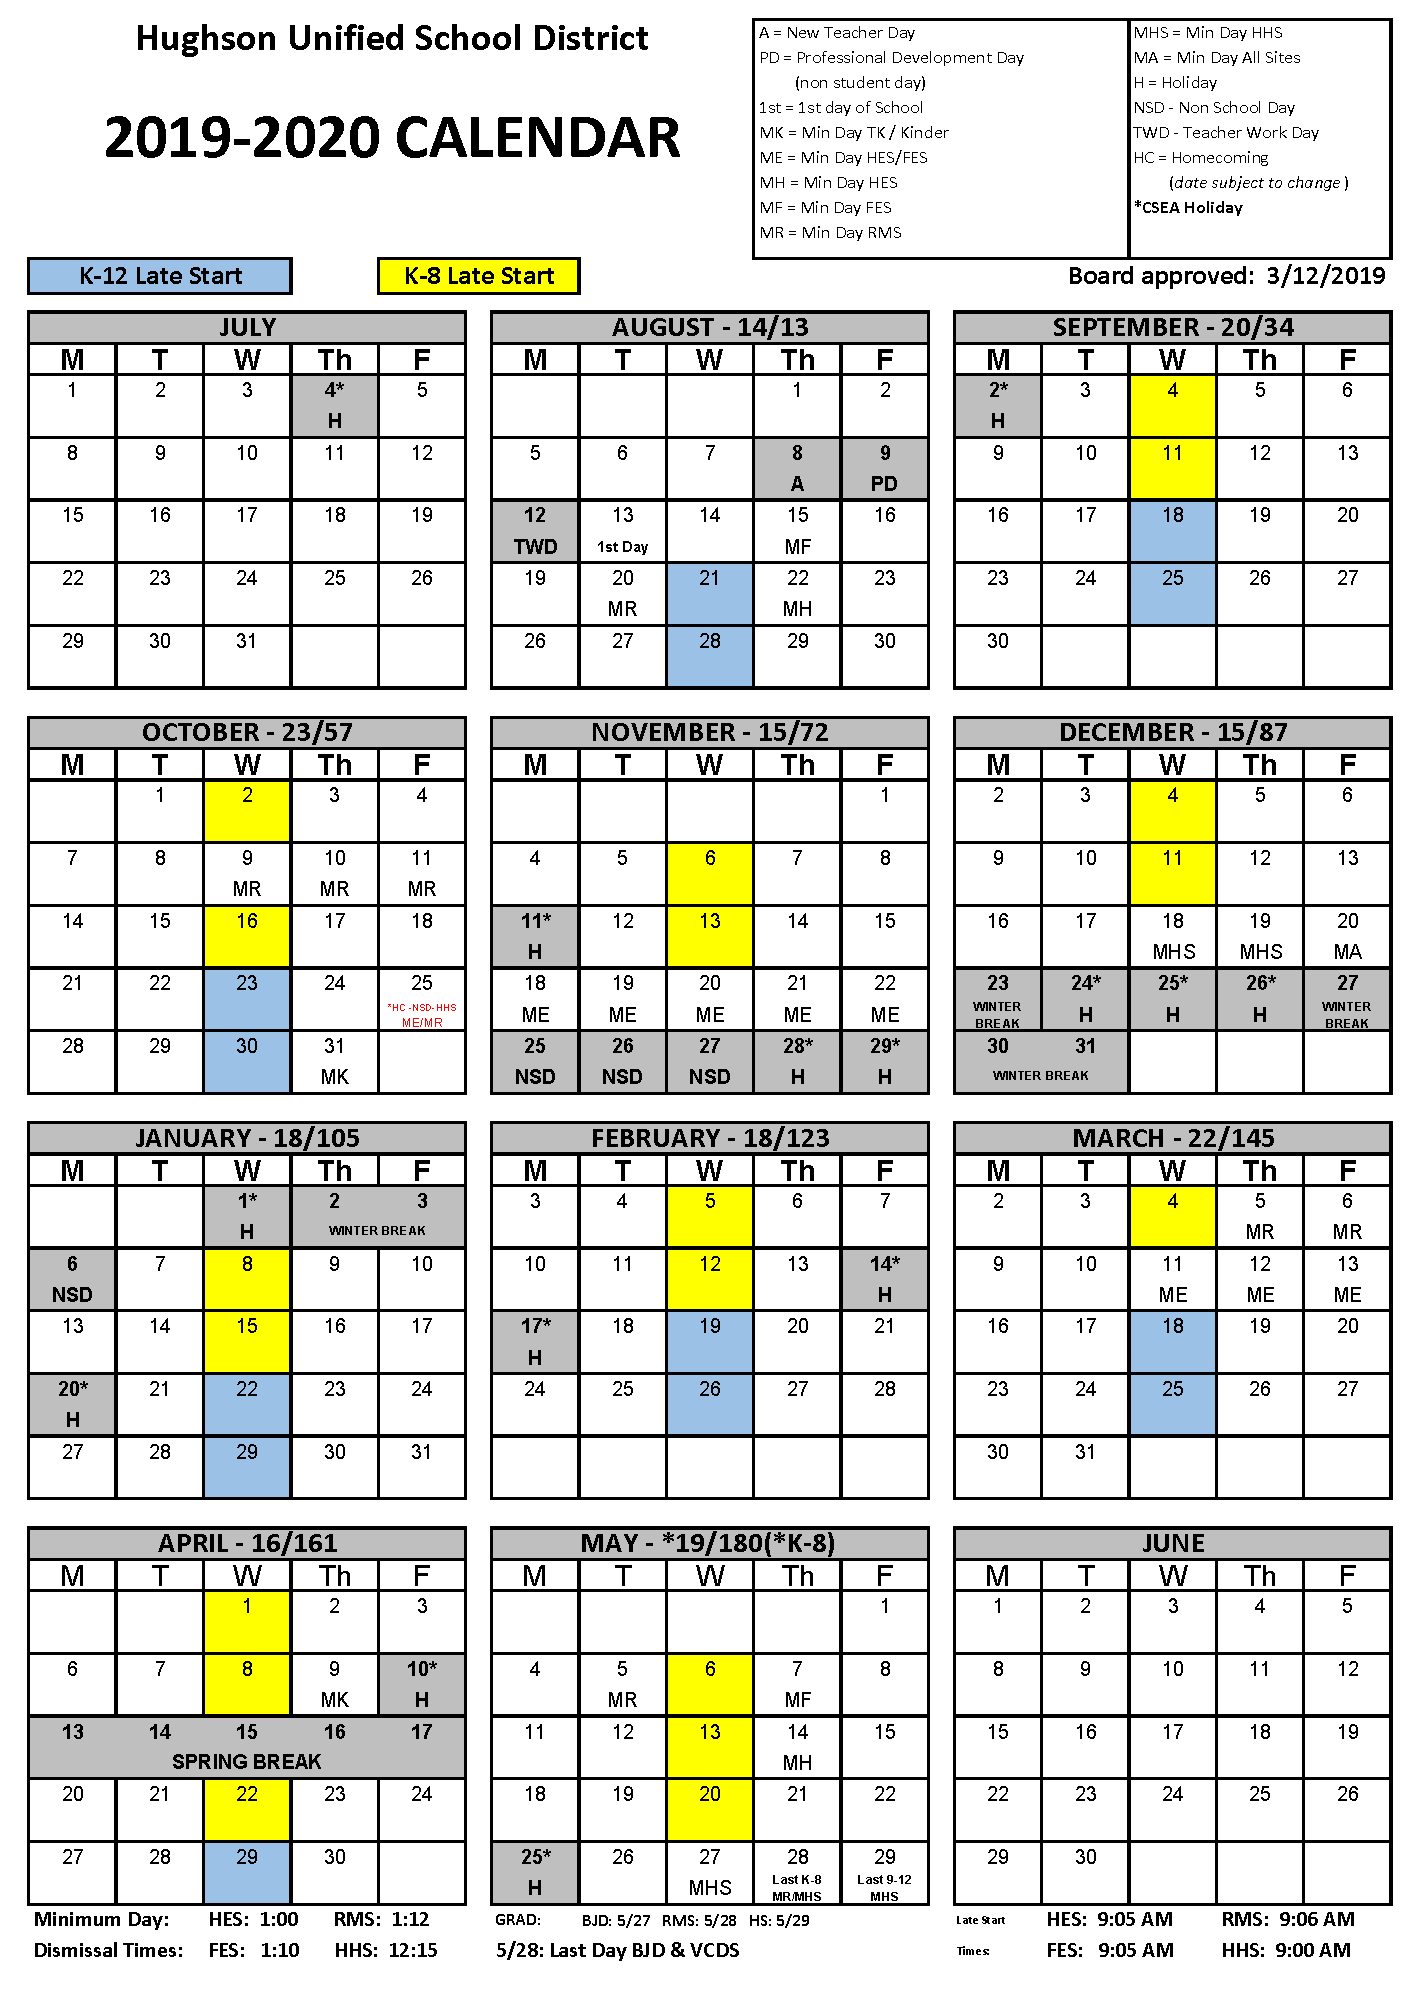 Calendar - Hughson Unified School District